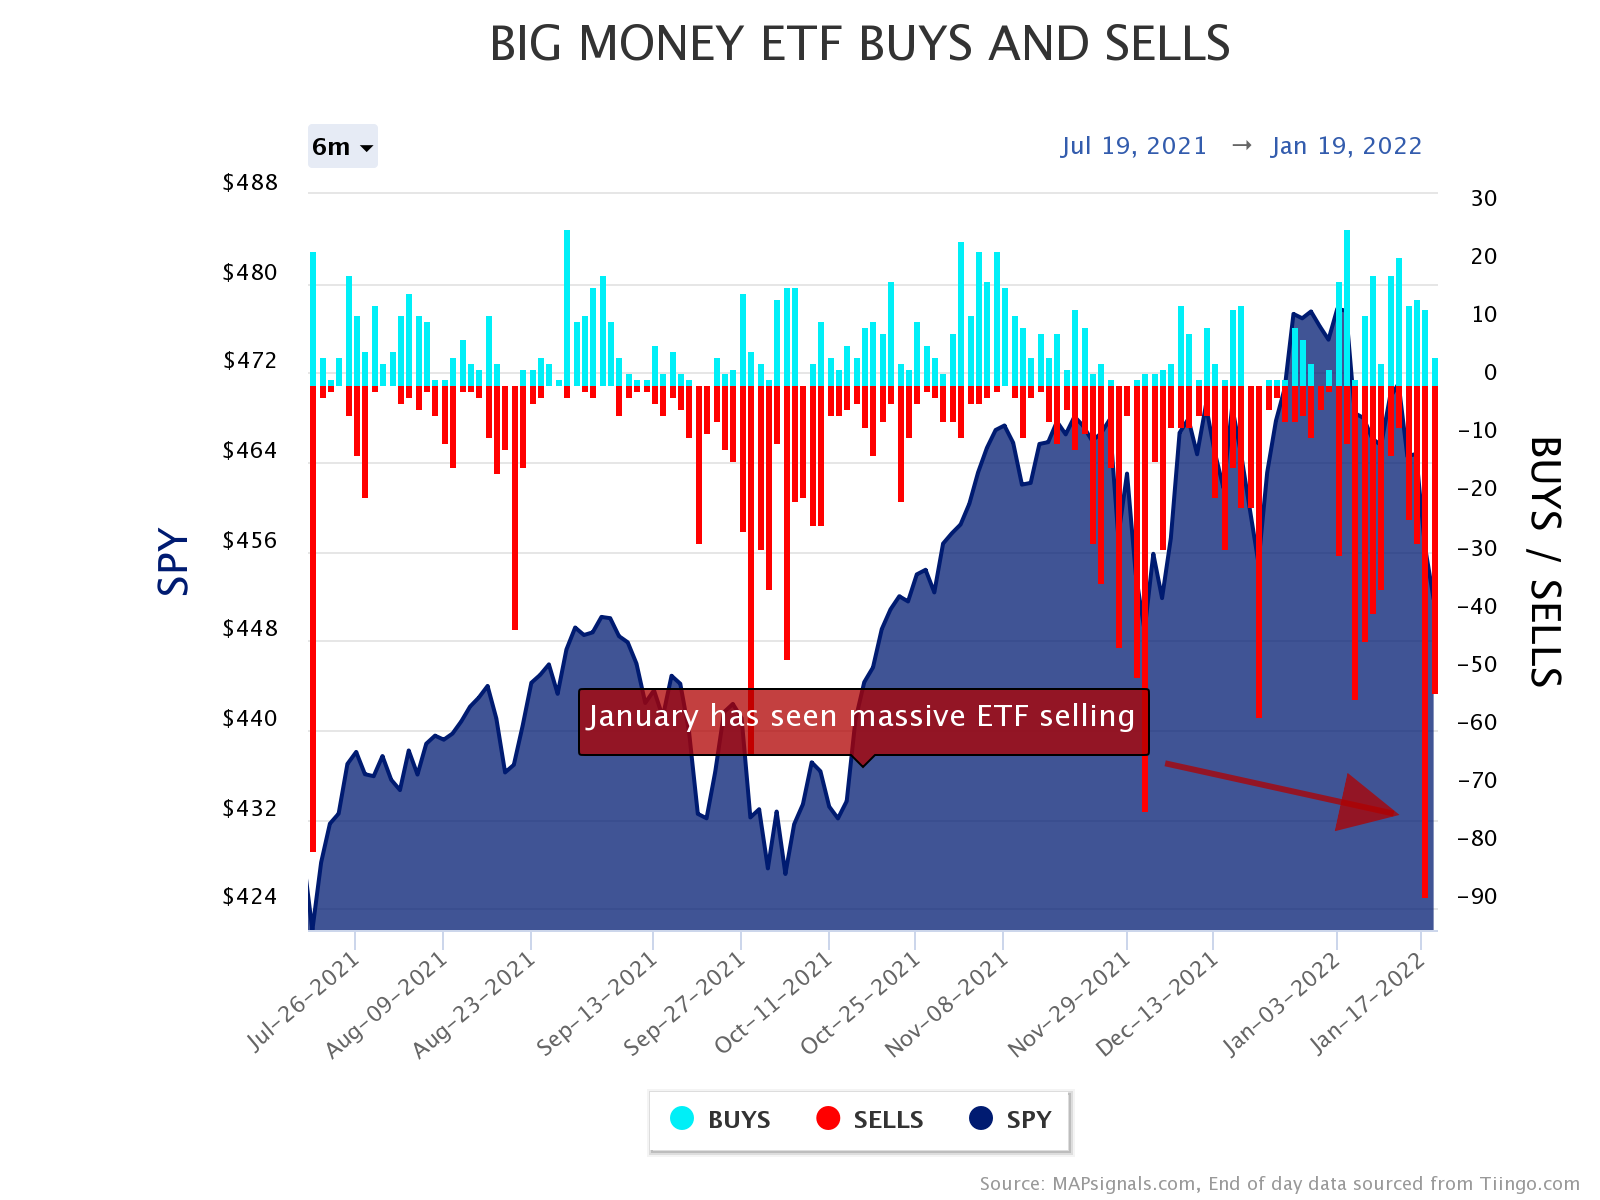 Massive ETF selling in January